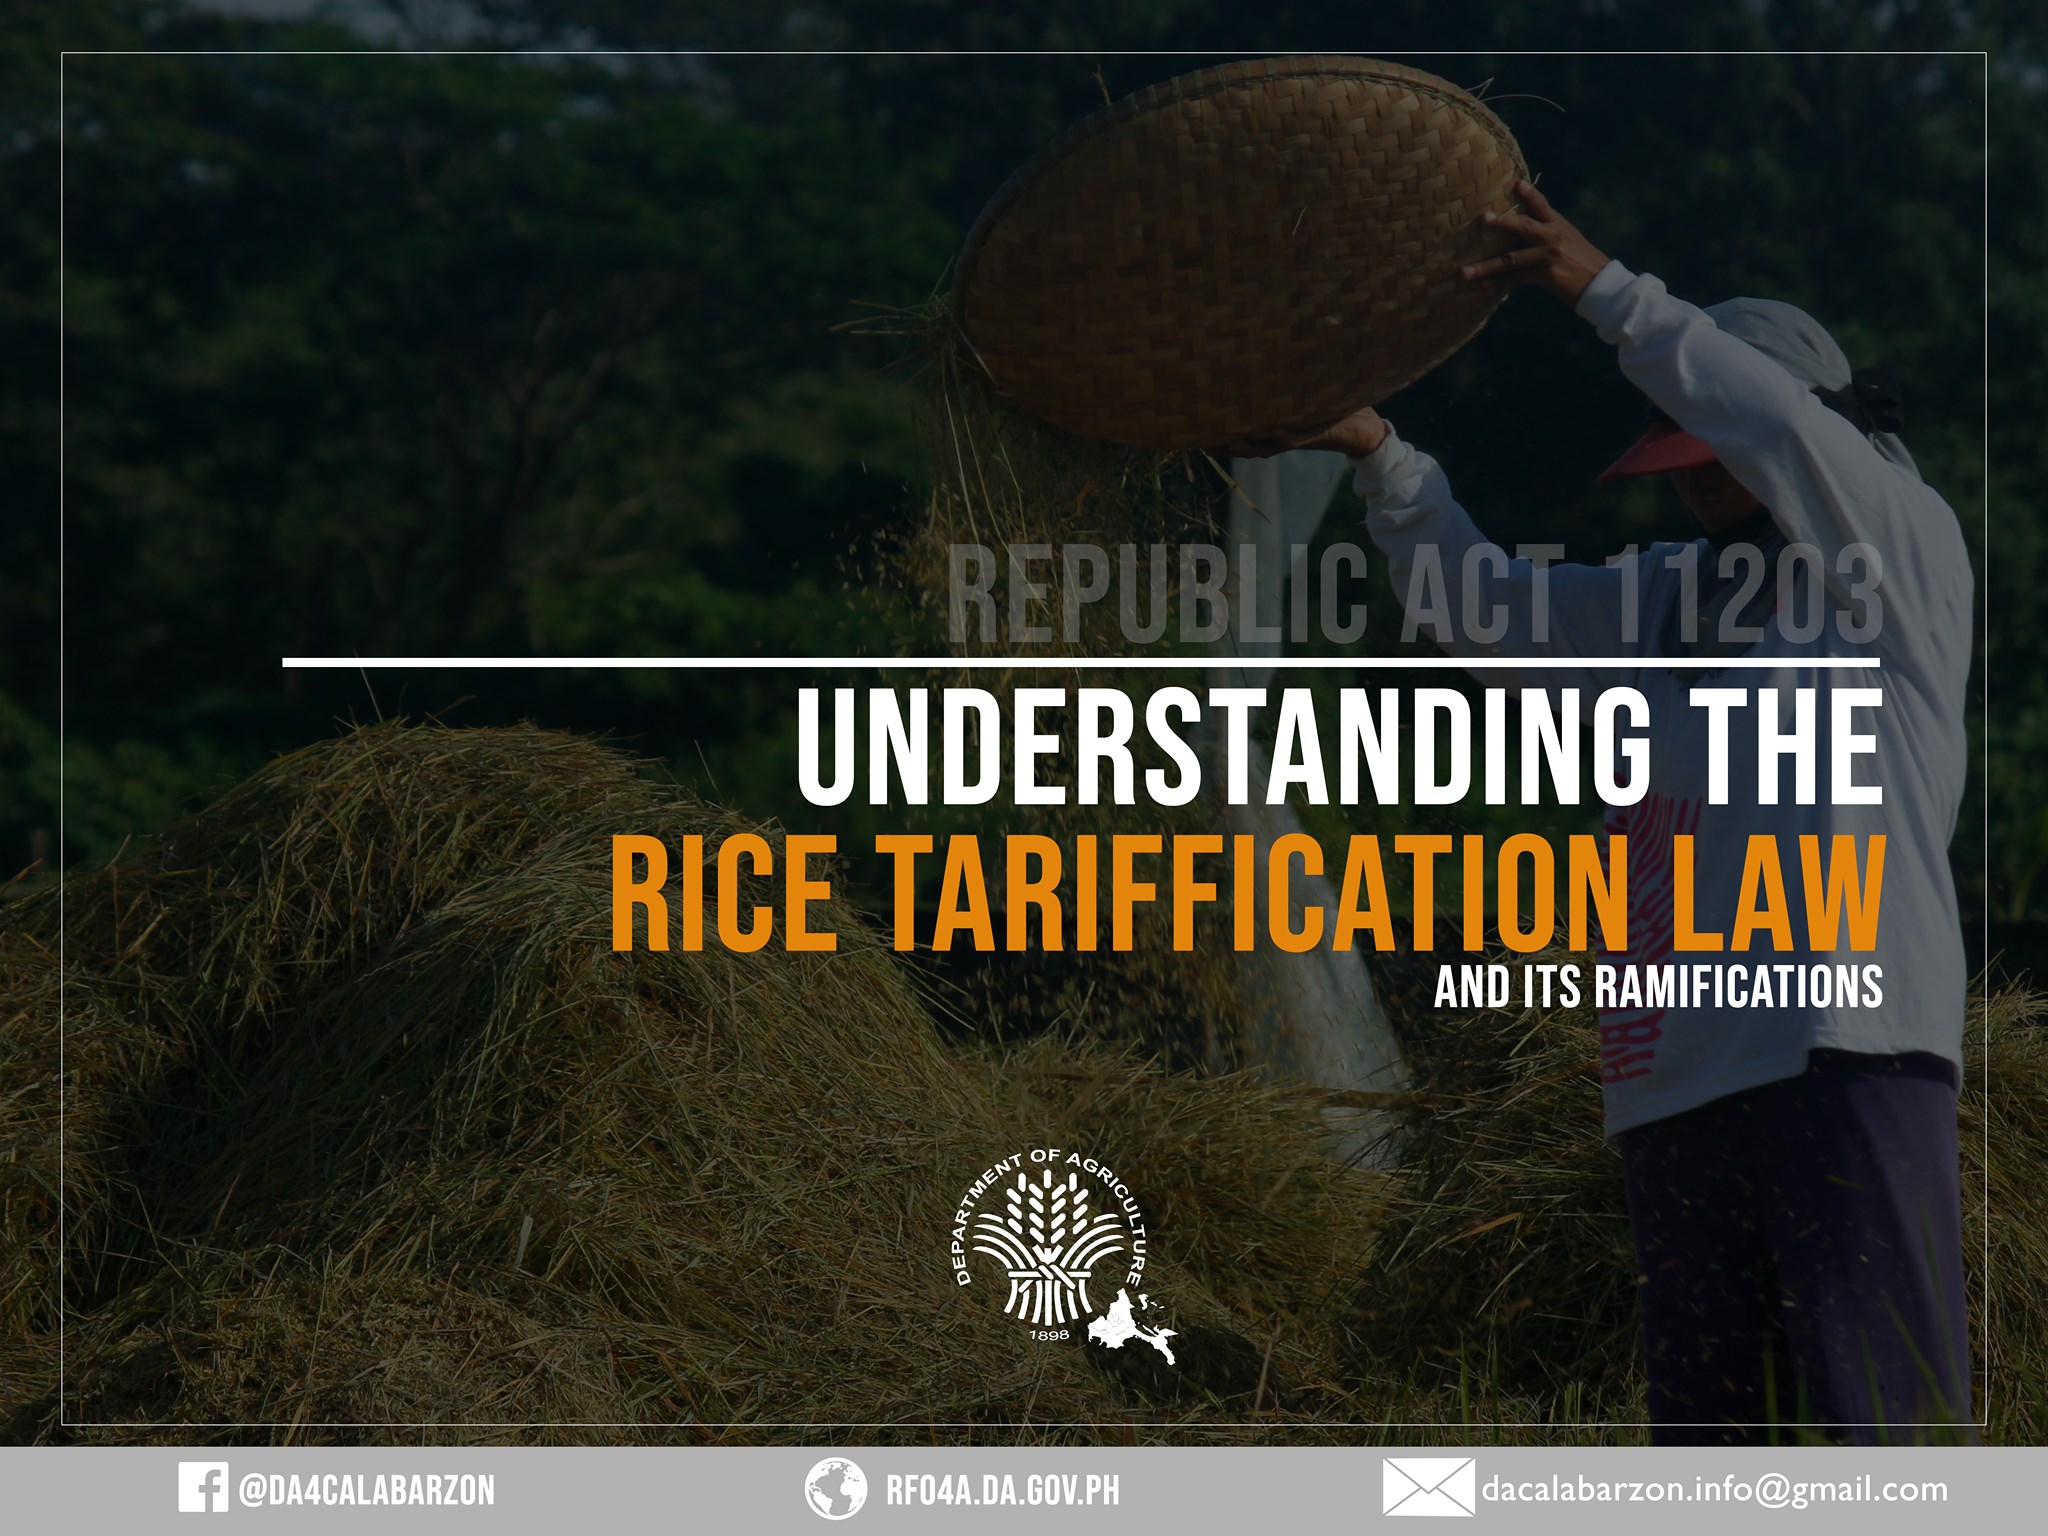 rice tariffication law tagalog essay